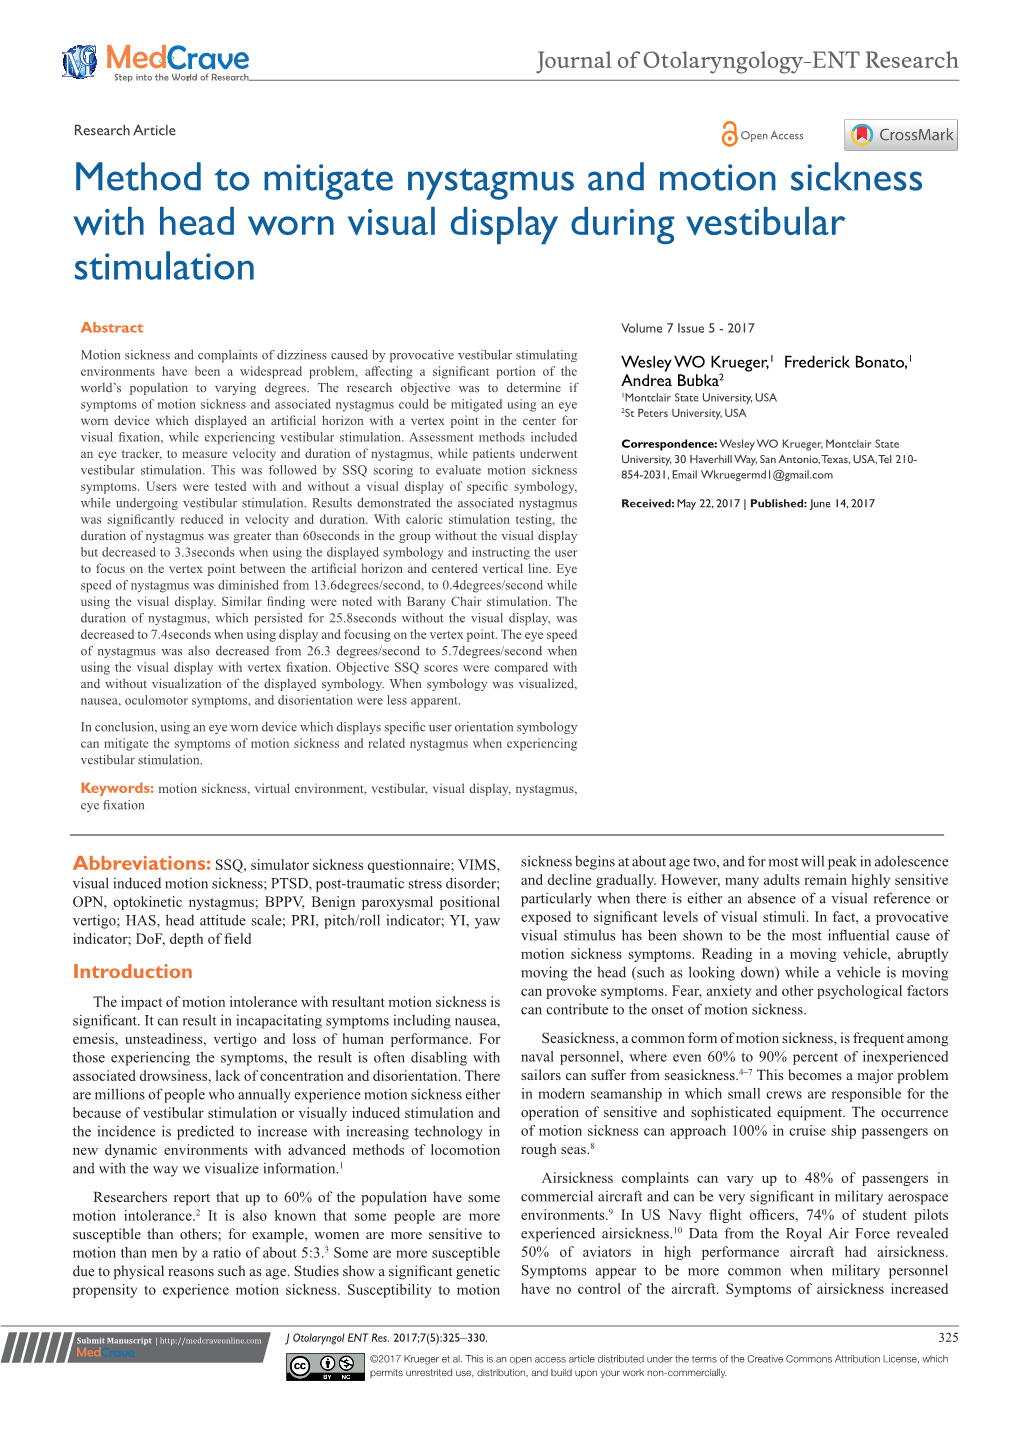 Method to Mitigate Nystagmus and Motion Sickness with Head Worn Visual Display During Vestibular Stimulation